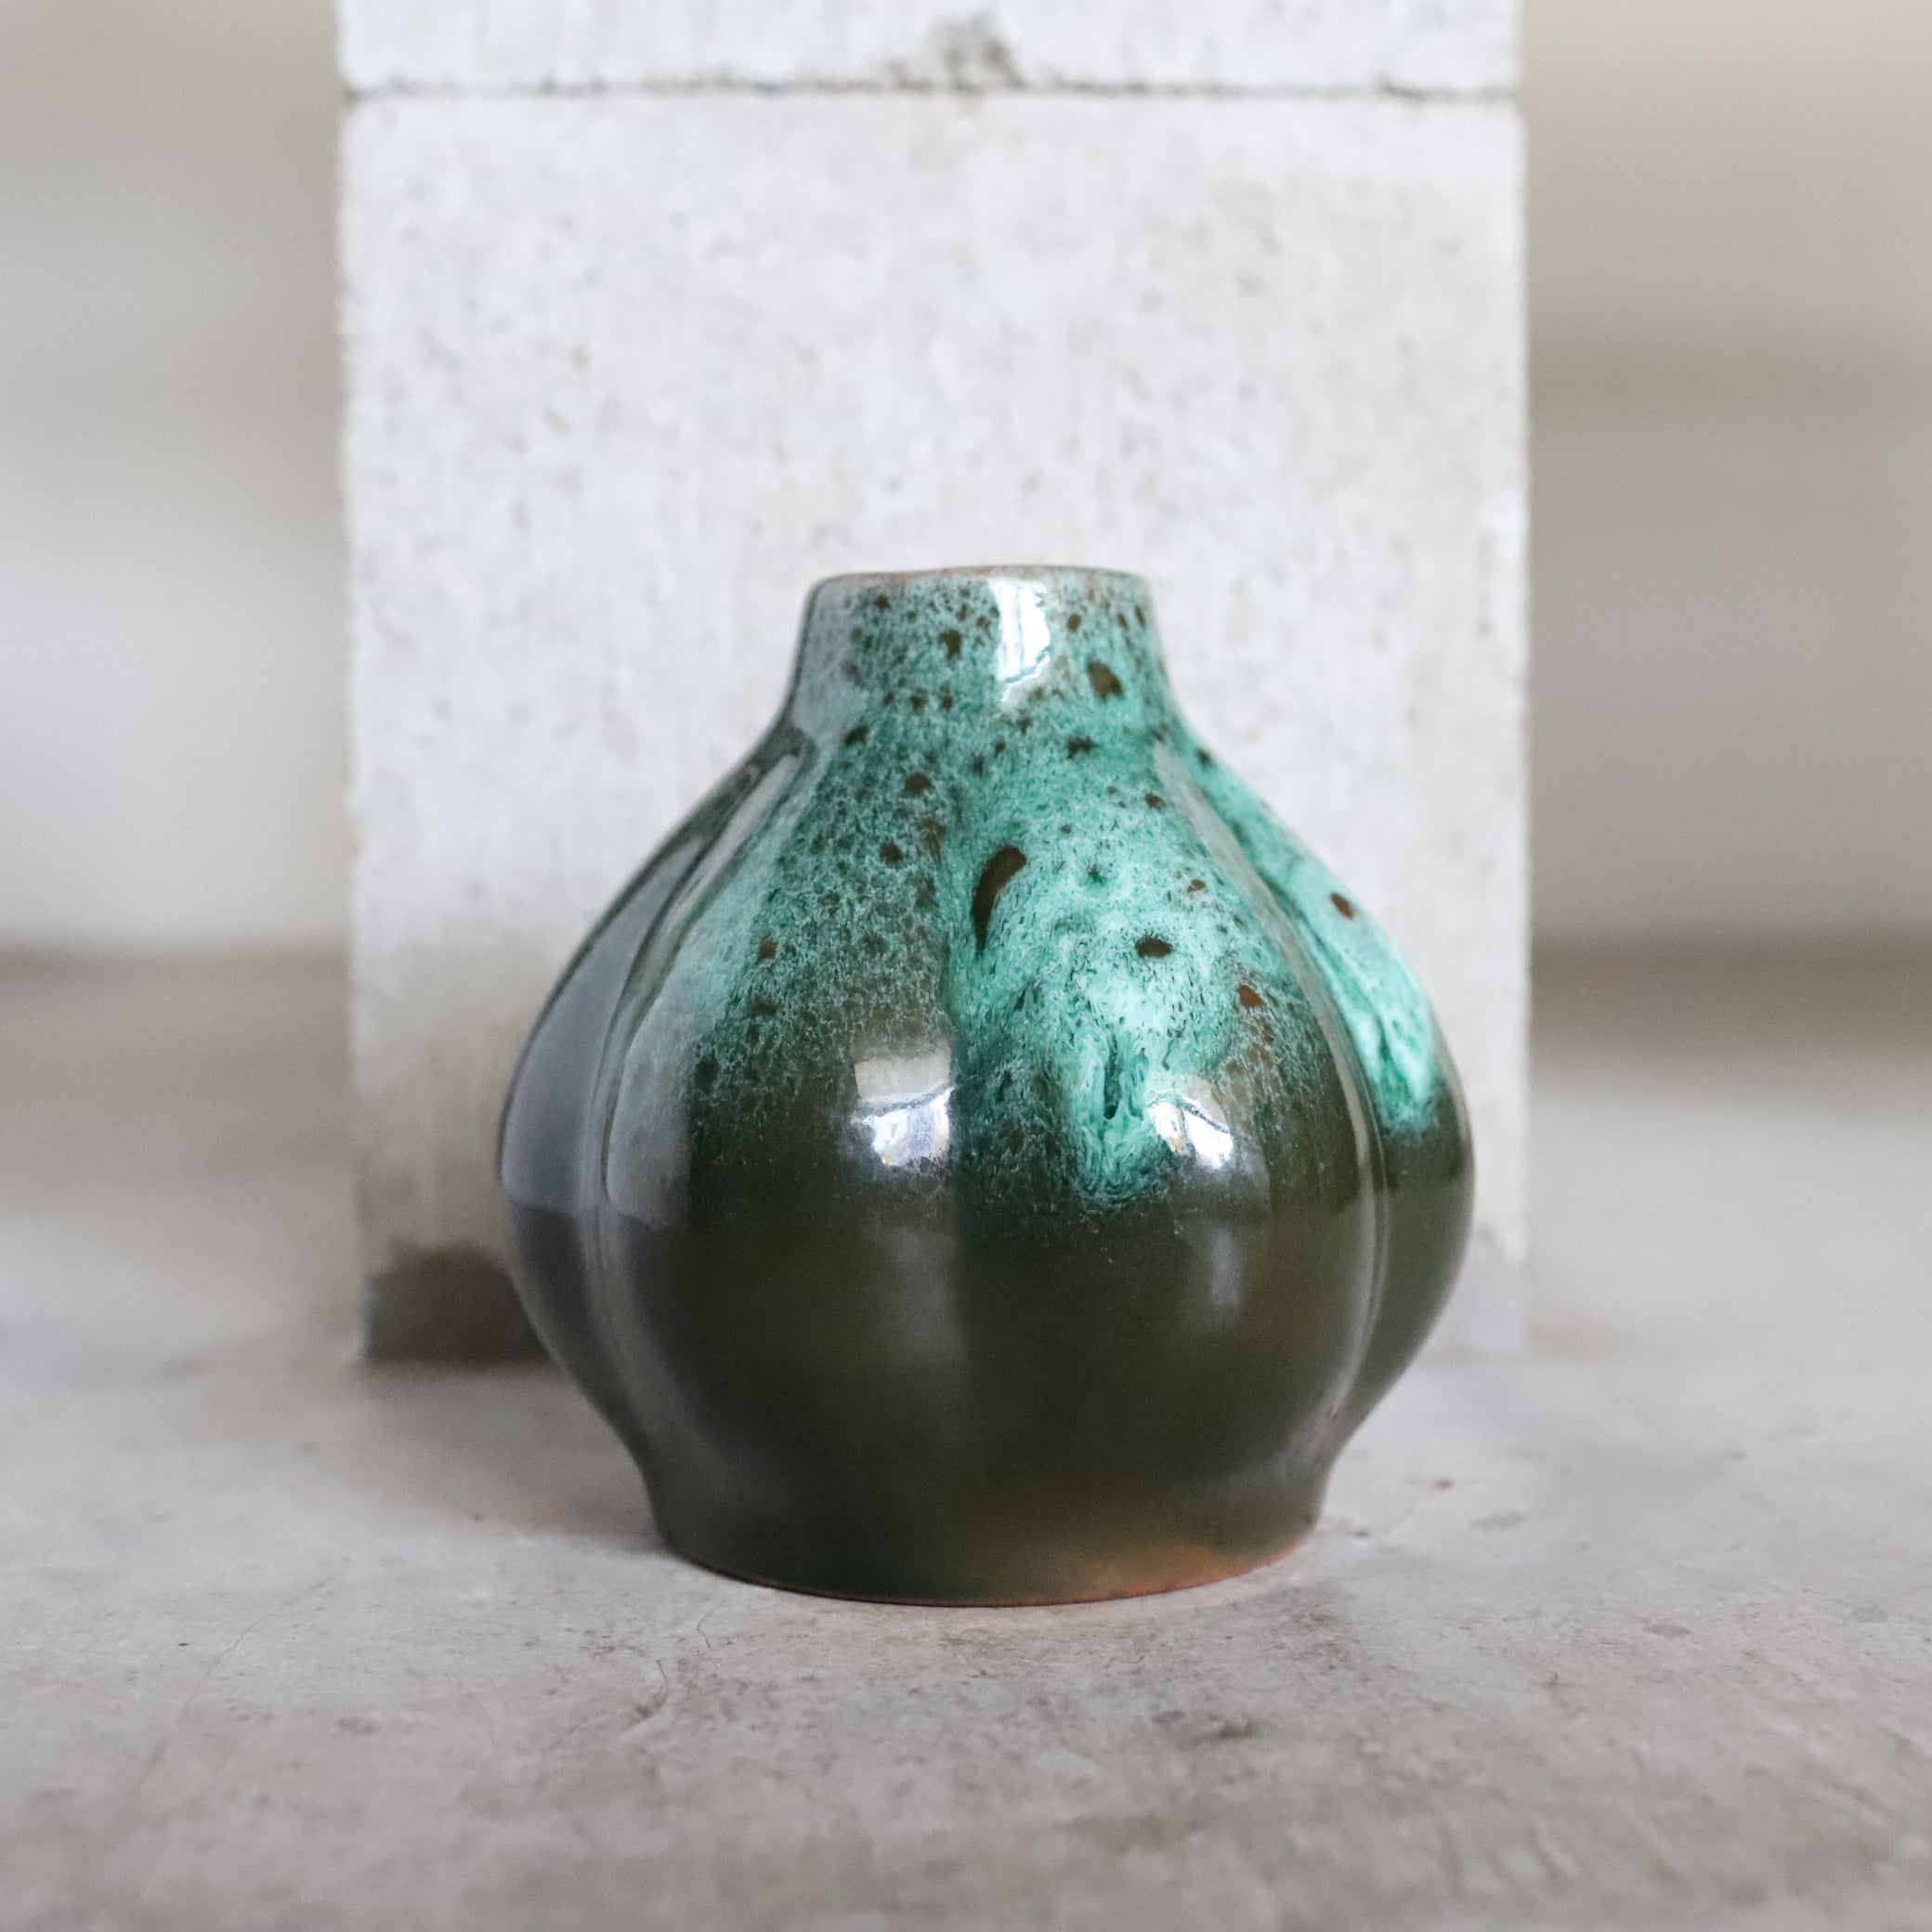 July Vase #3